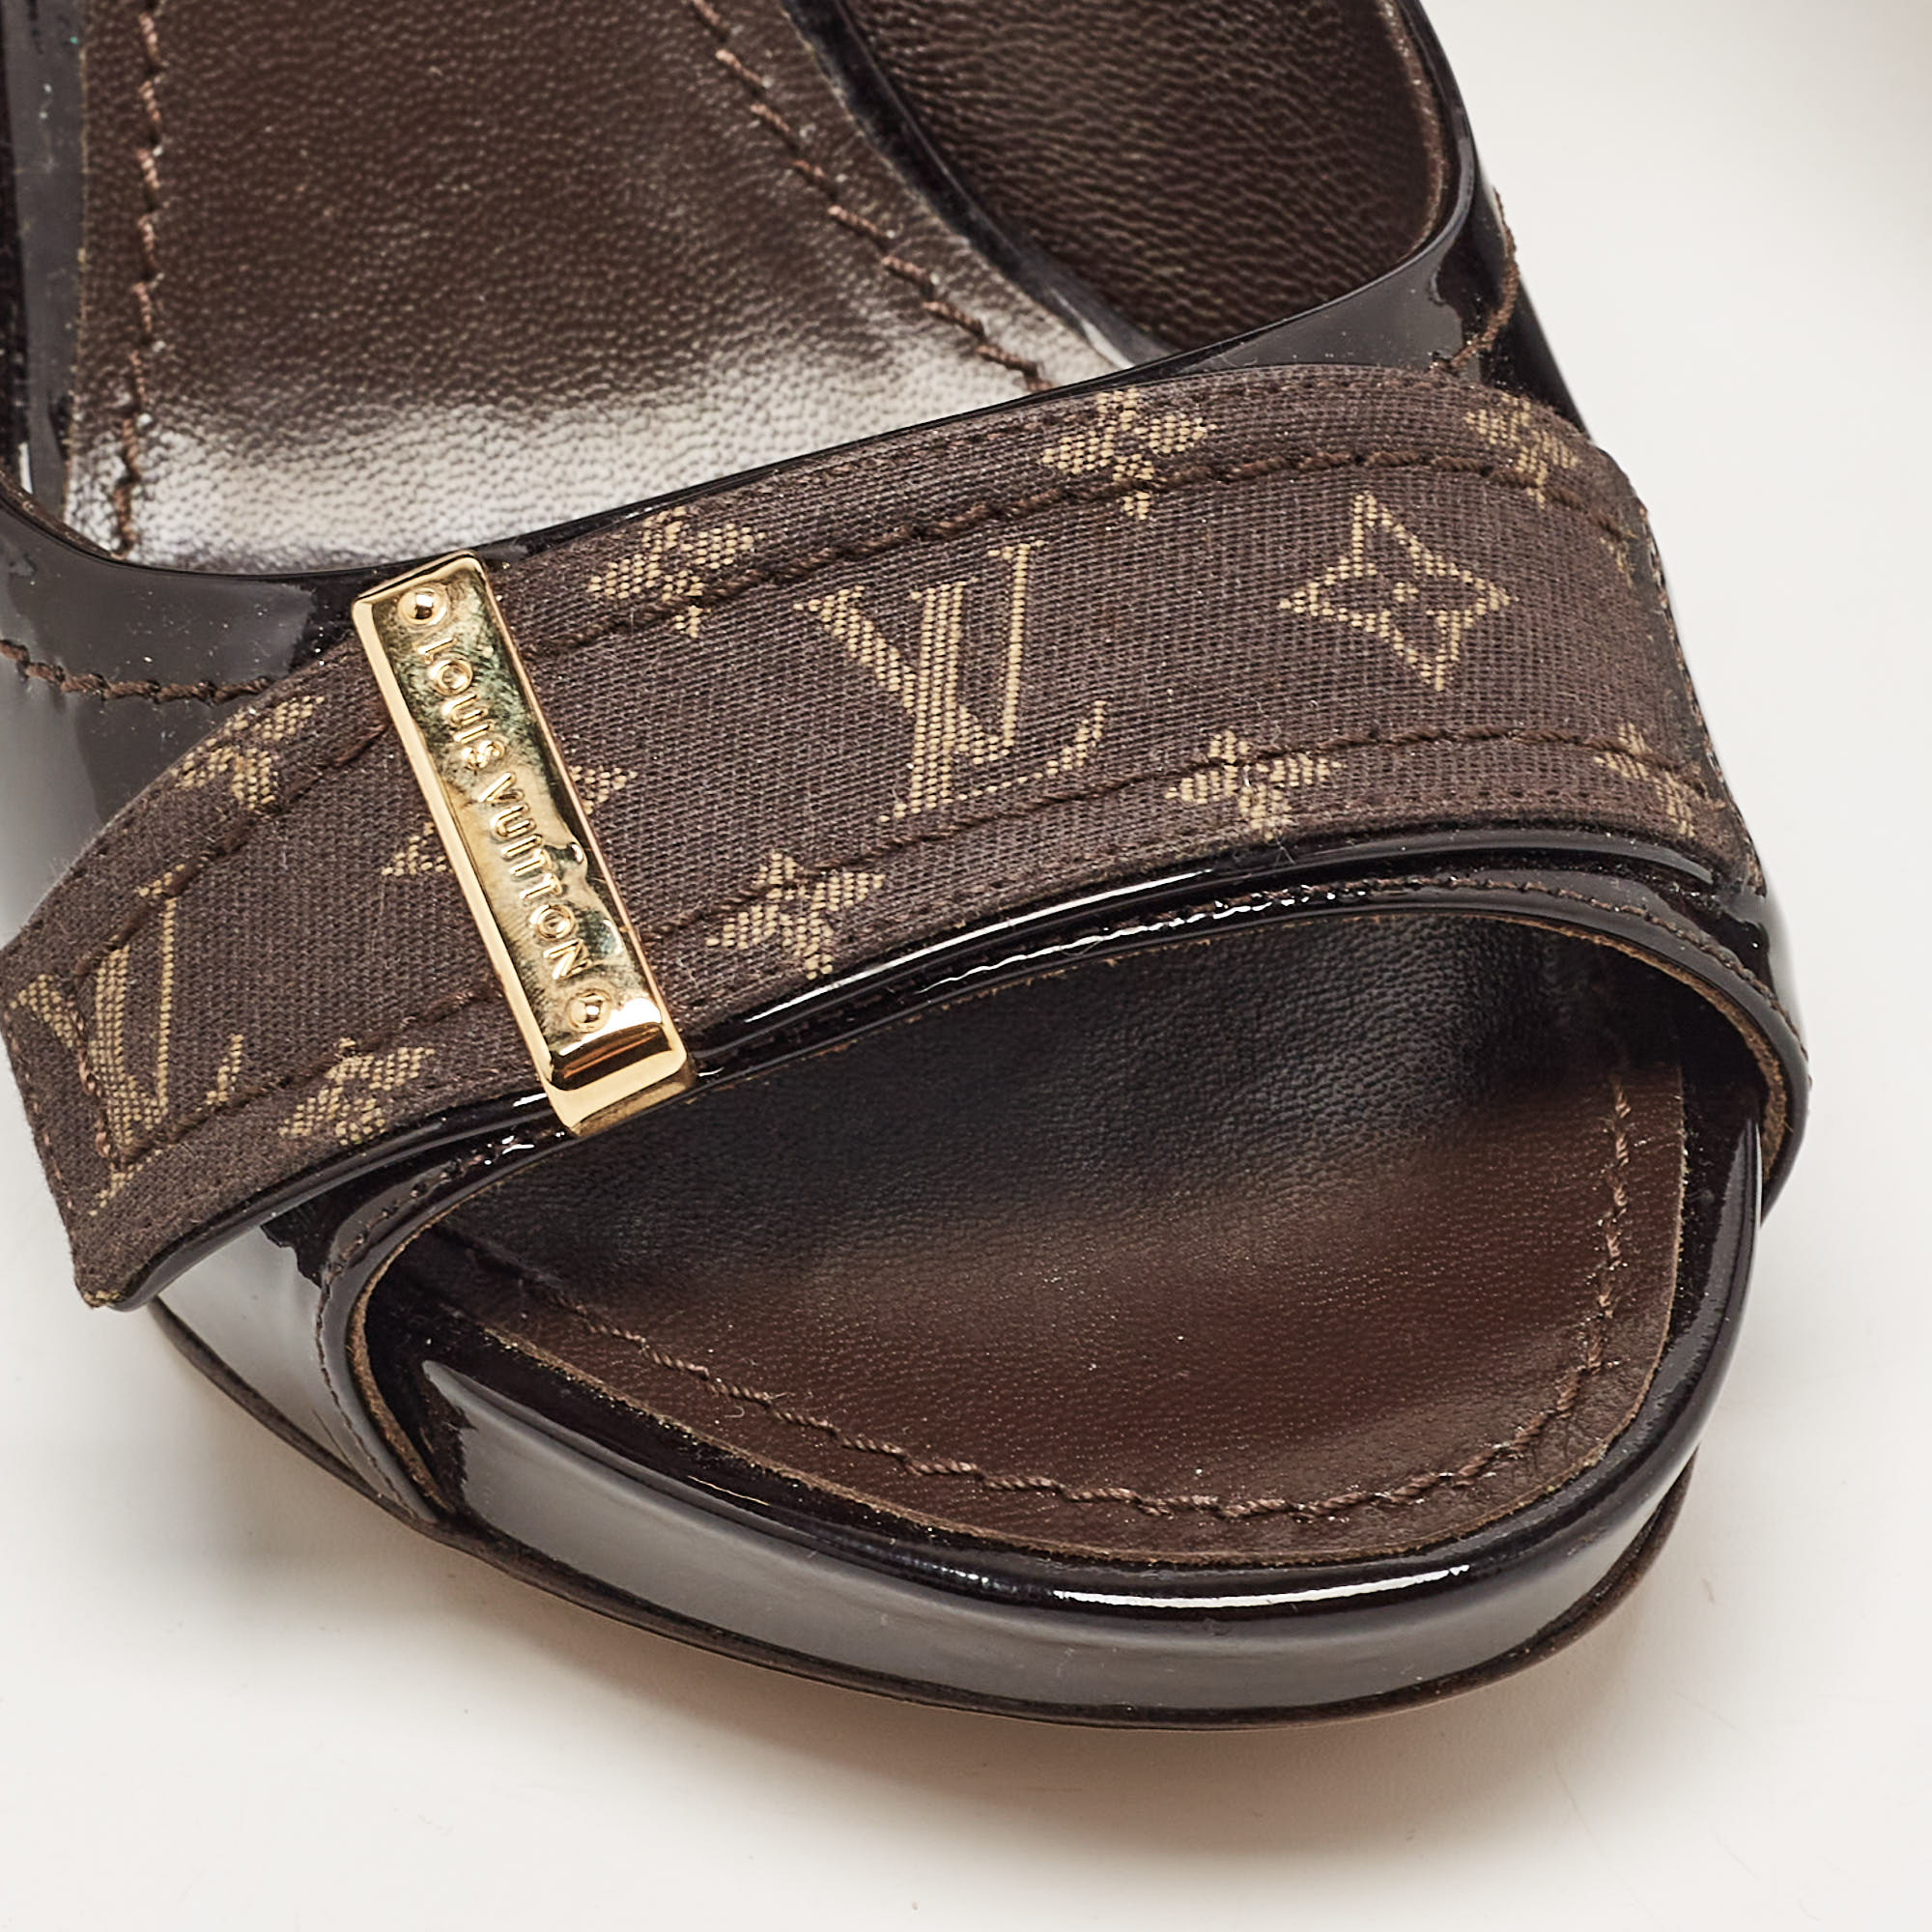 Louis Vuitton Dark Burgundy Patent Leather Open Toe Pumps Size 37.5